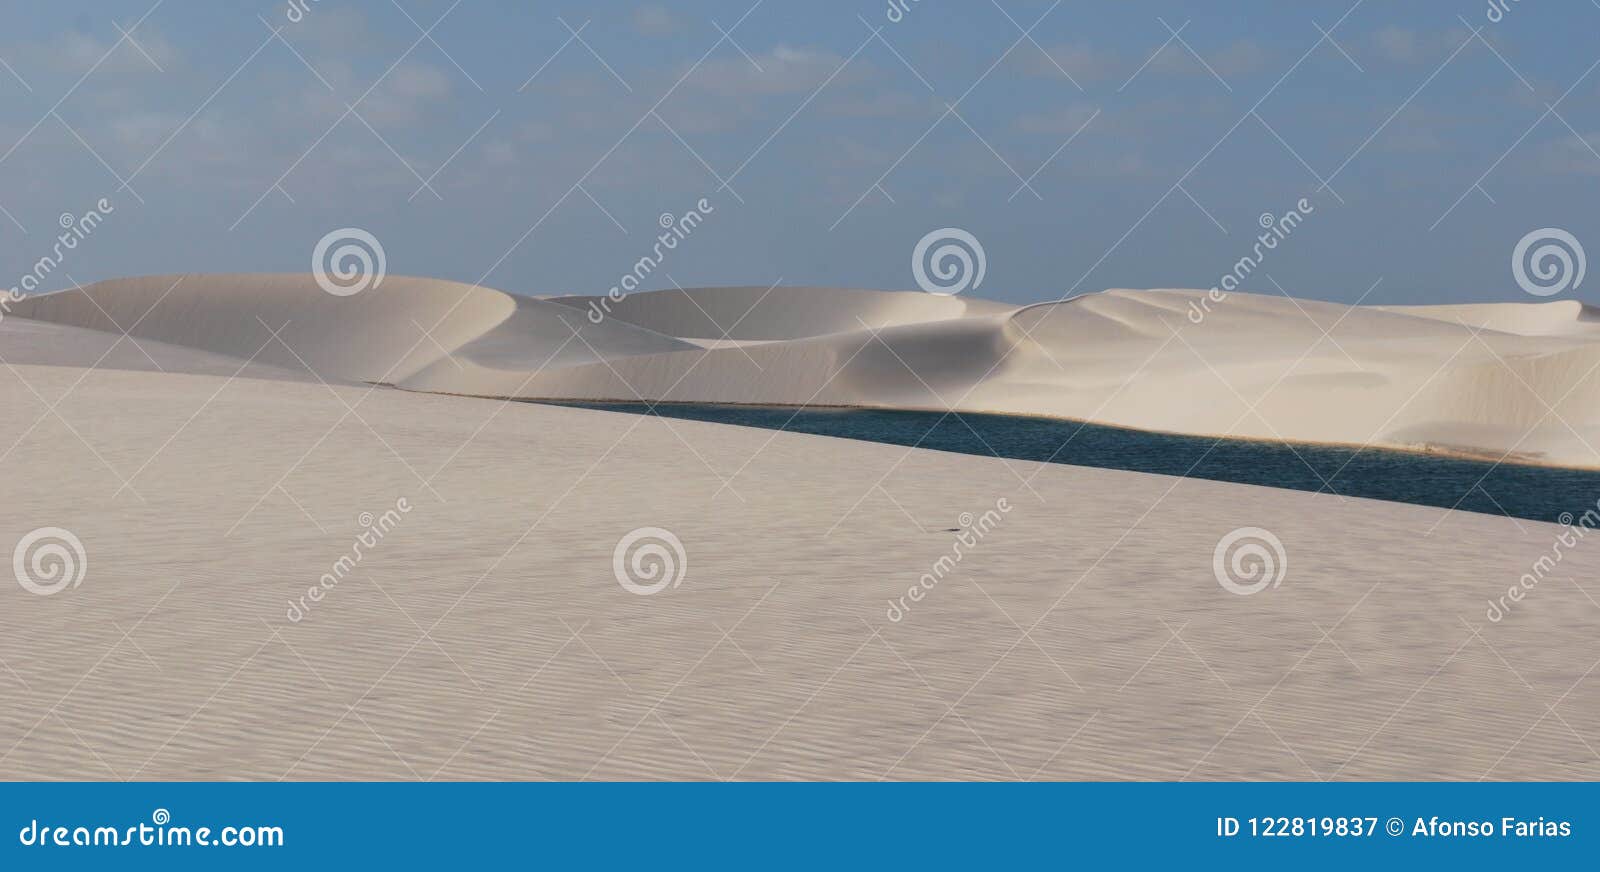 dunes landscape in barreirinhas, brazil